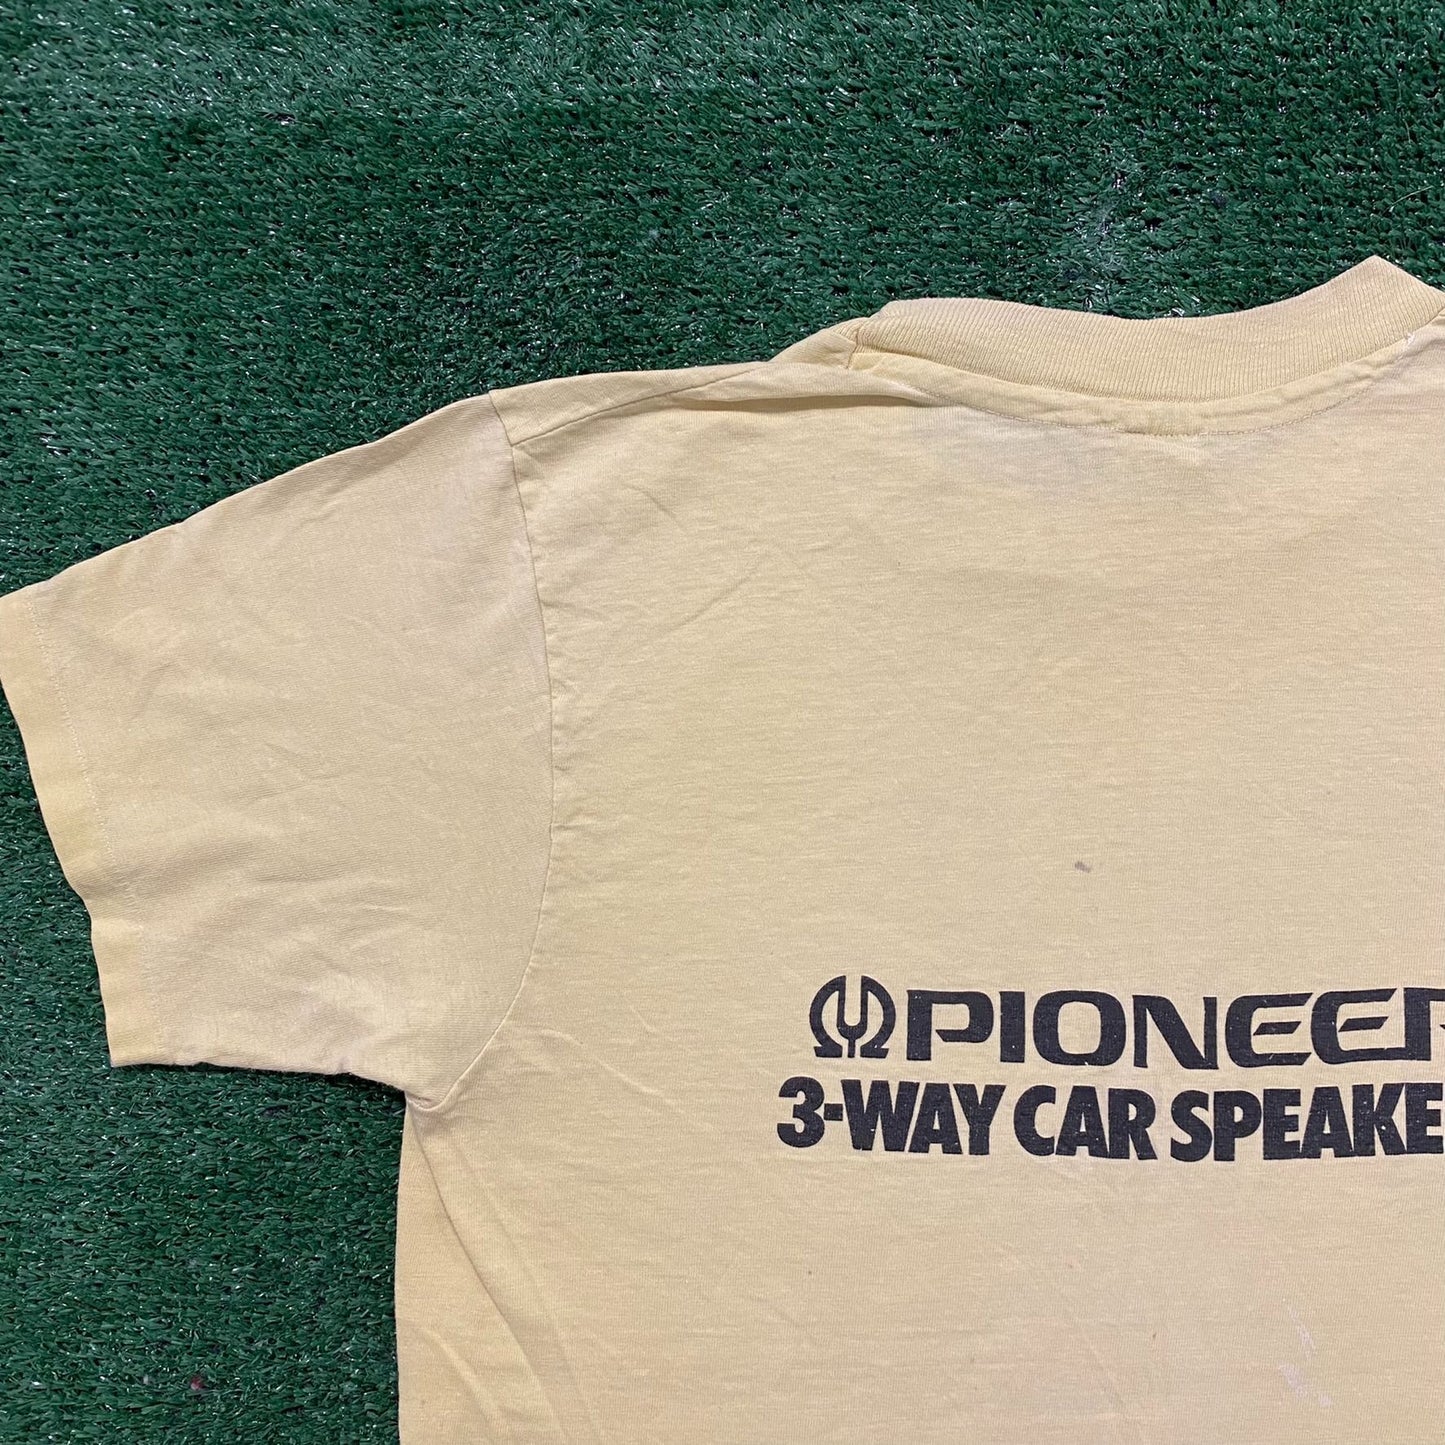 Vintage 70s 80s Pioneer 3 Way Single Stitch T-Shirt